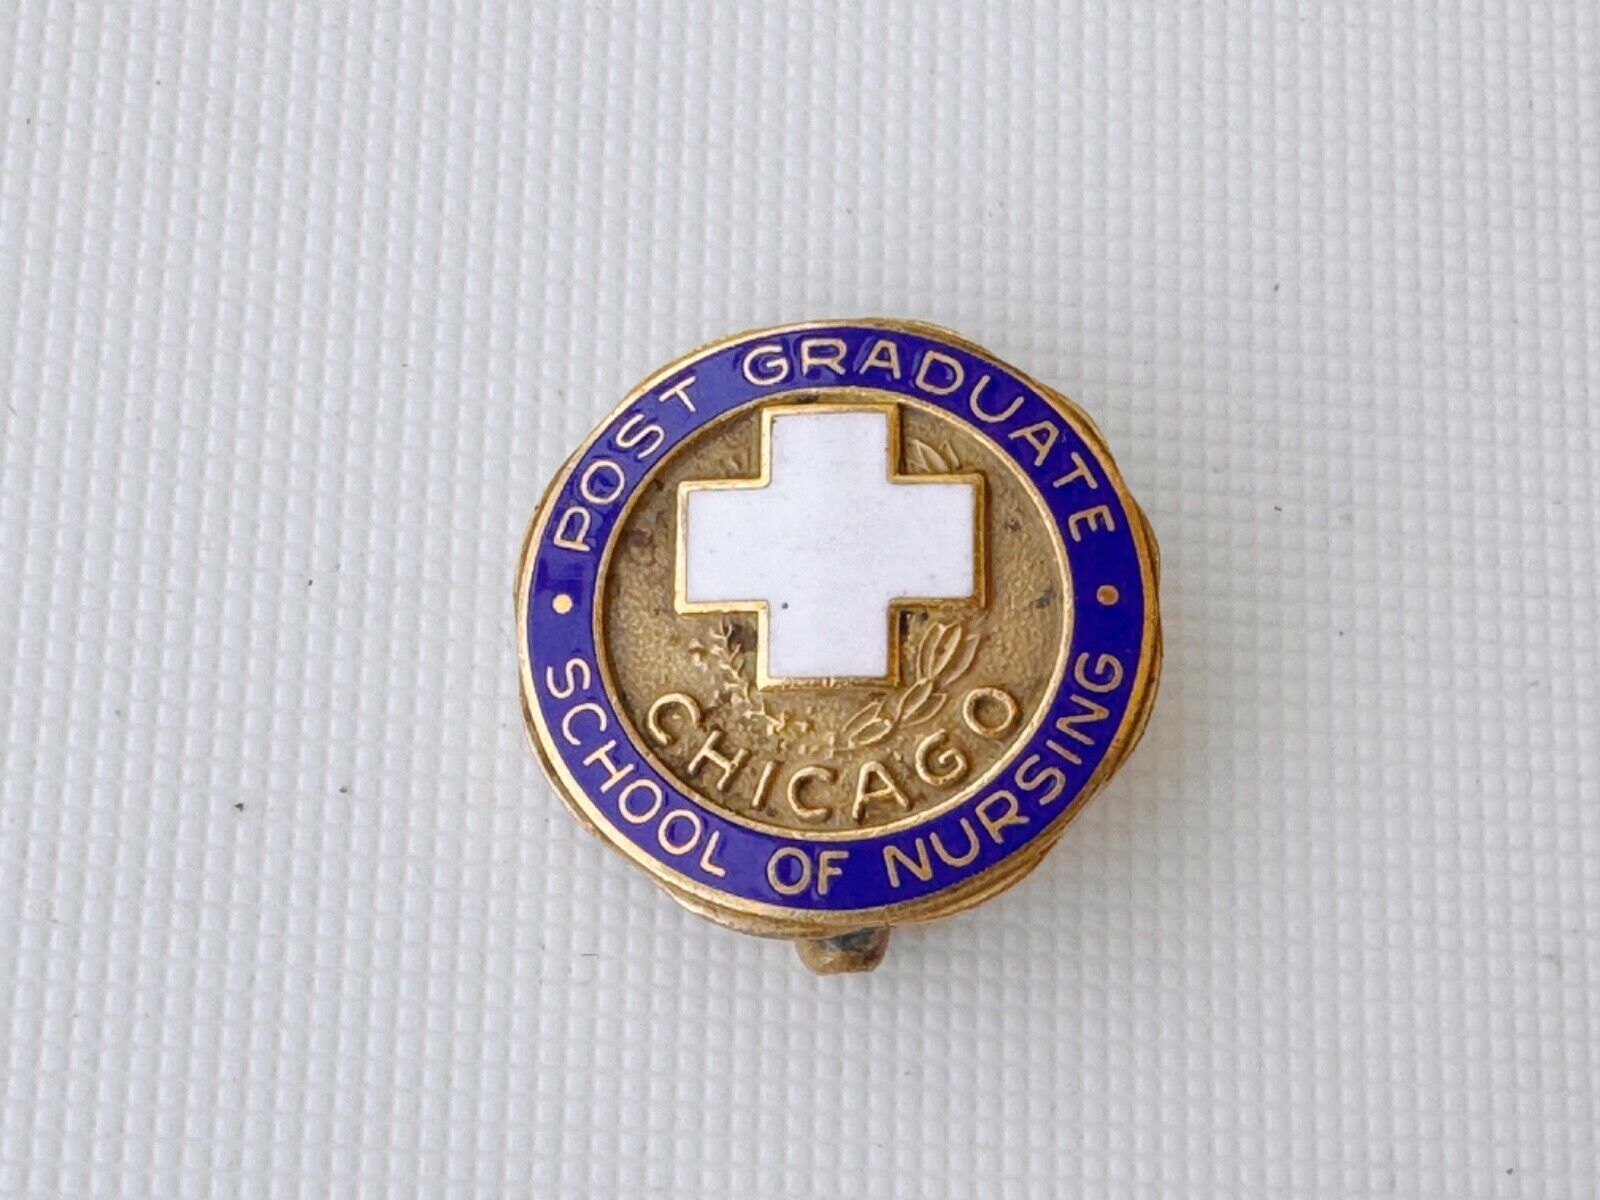 vintage chicago post graduate school of nursing pin 3/4 inch